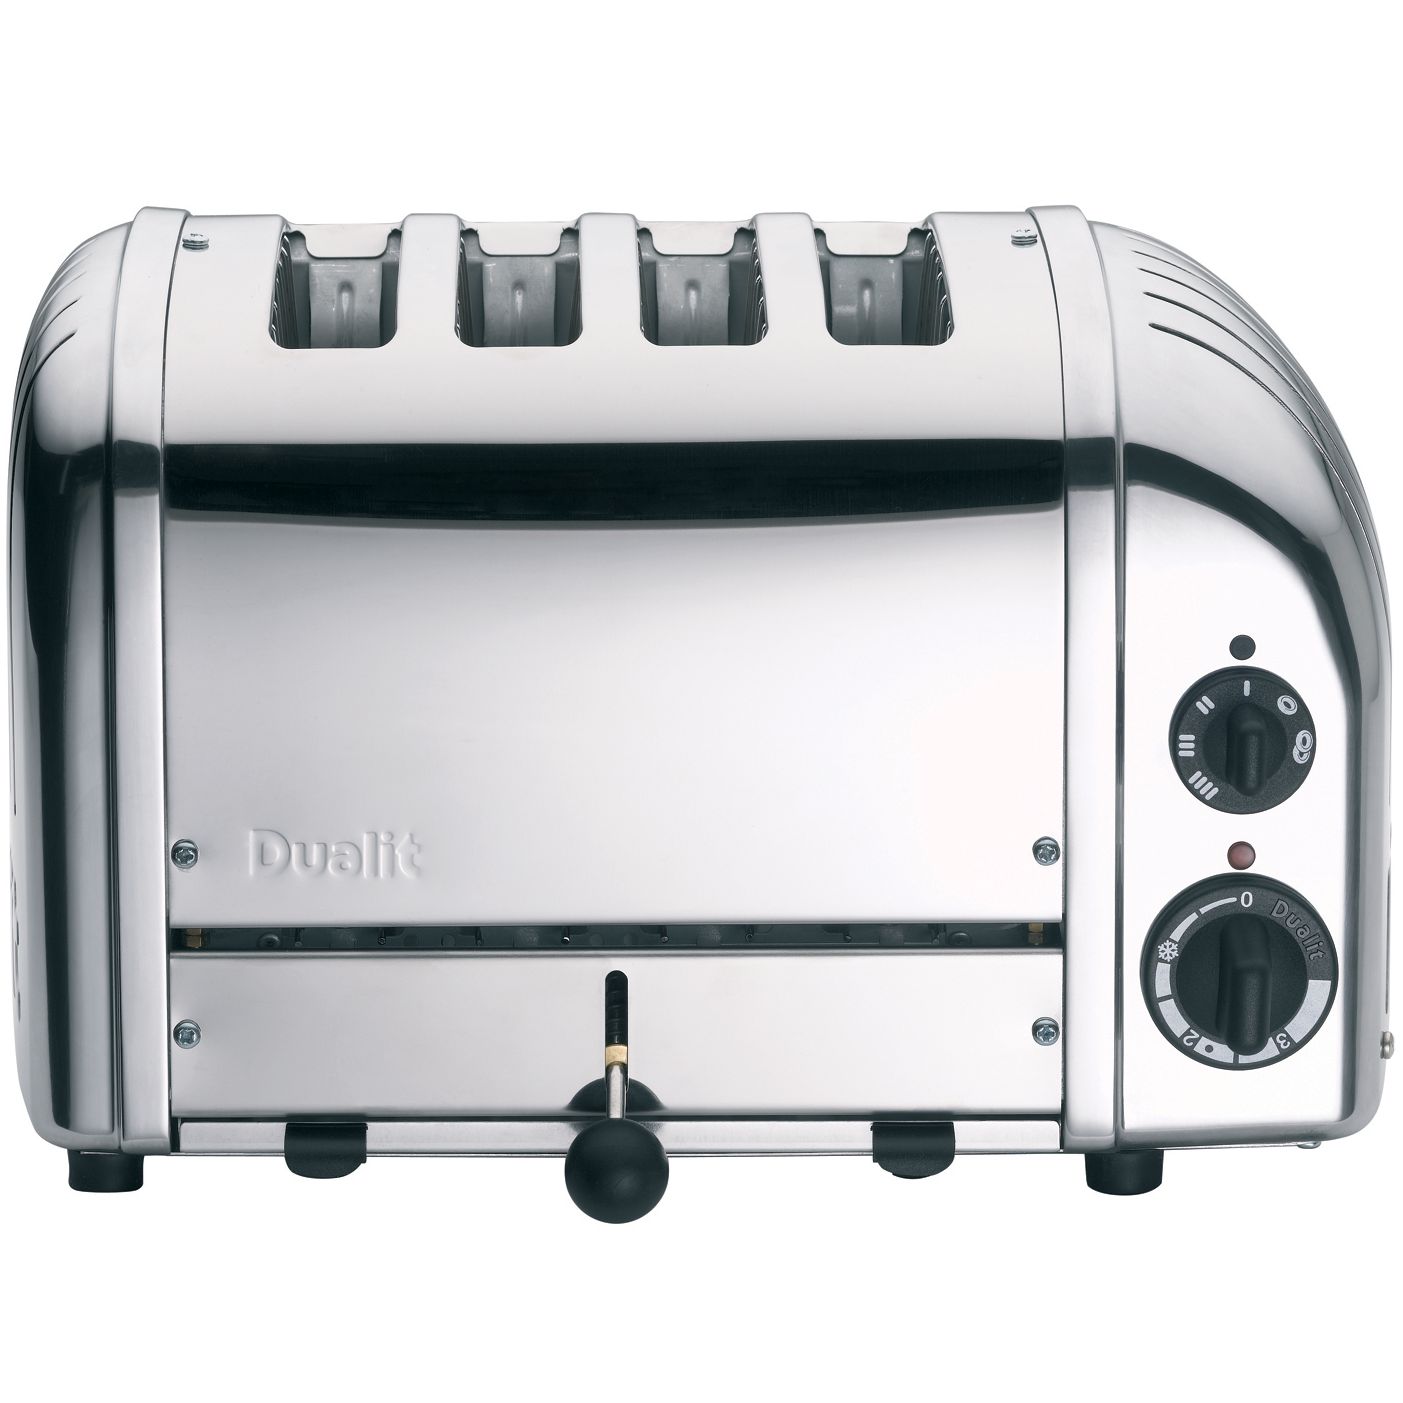 Dualit NewGen Toaster, 4-Slice, Polished Stainless Steel at JohnLewis